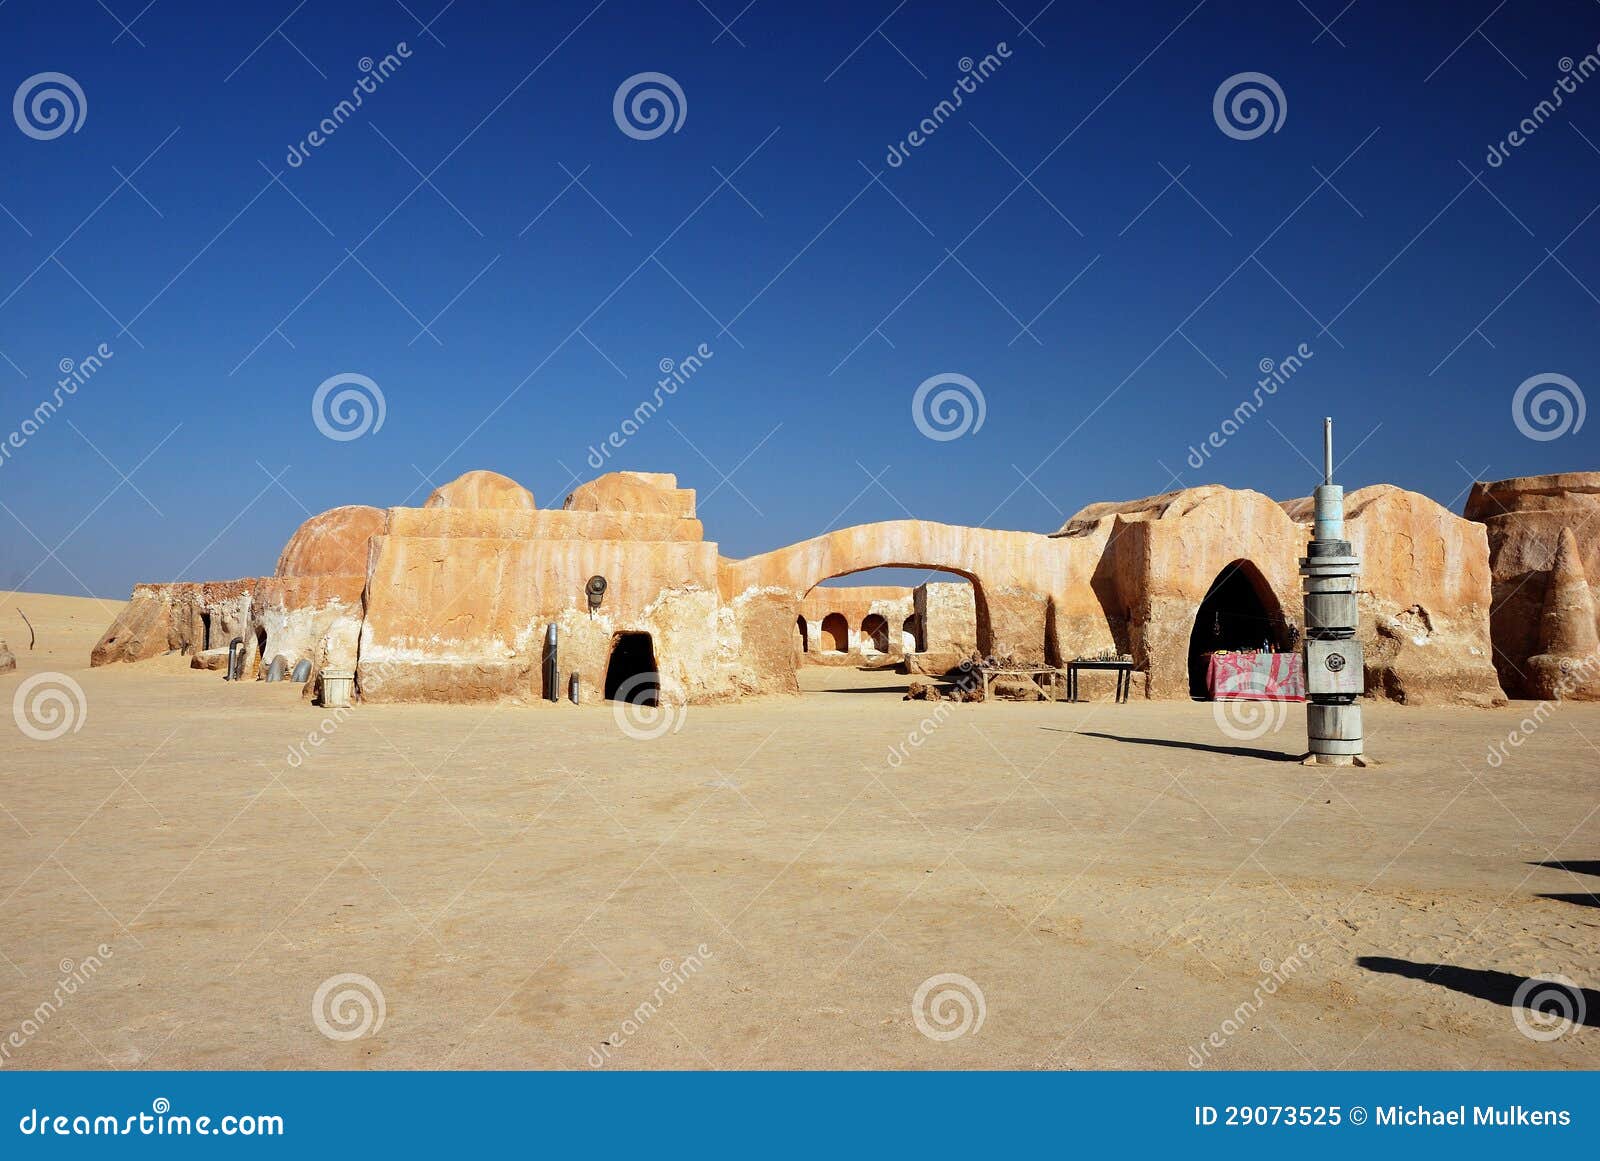 Star Wars Film Set, Tunisia Editorial Image - Image of prop, anakyn